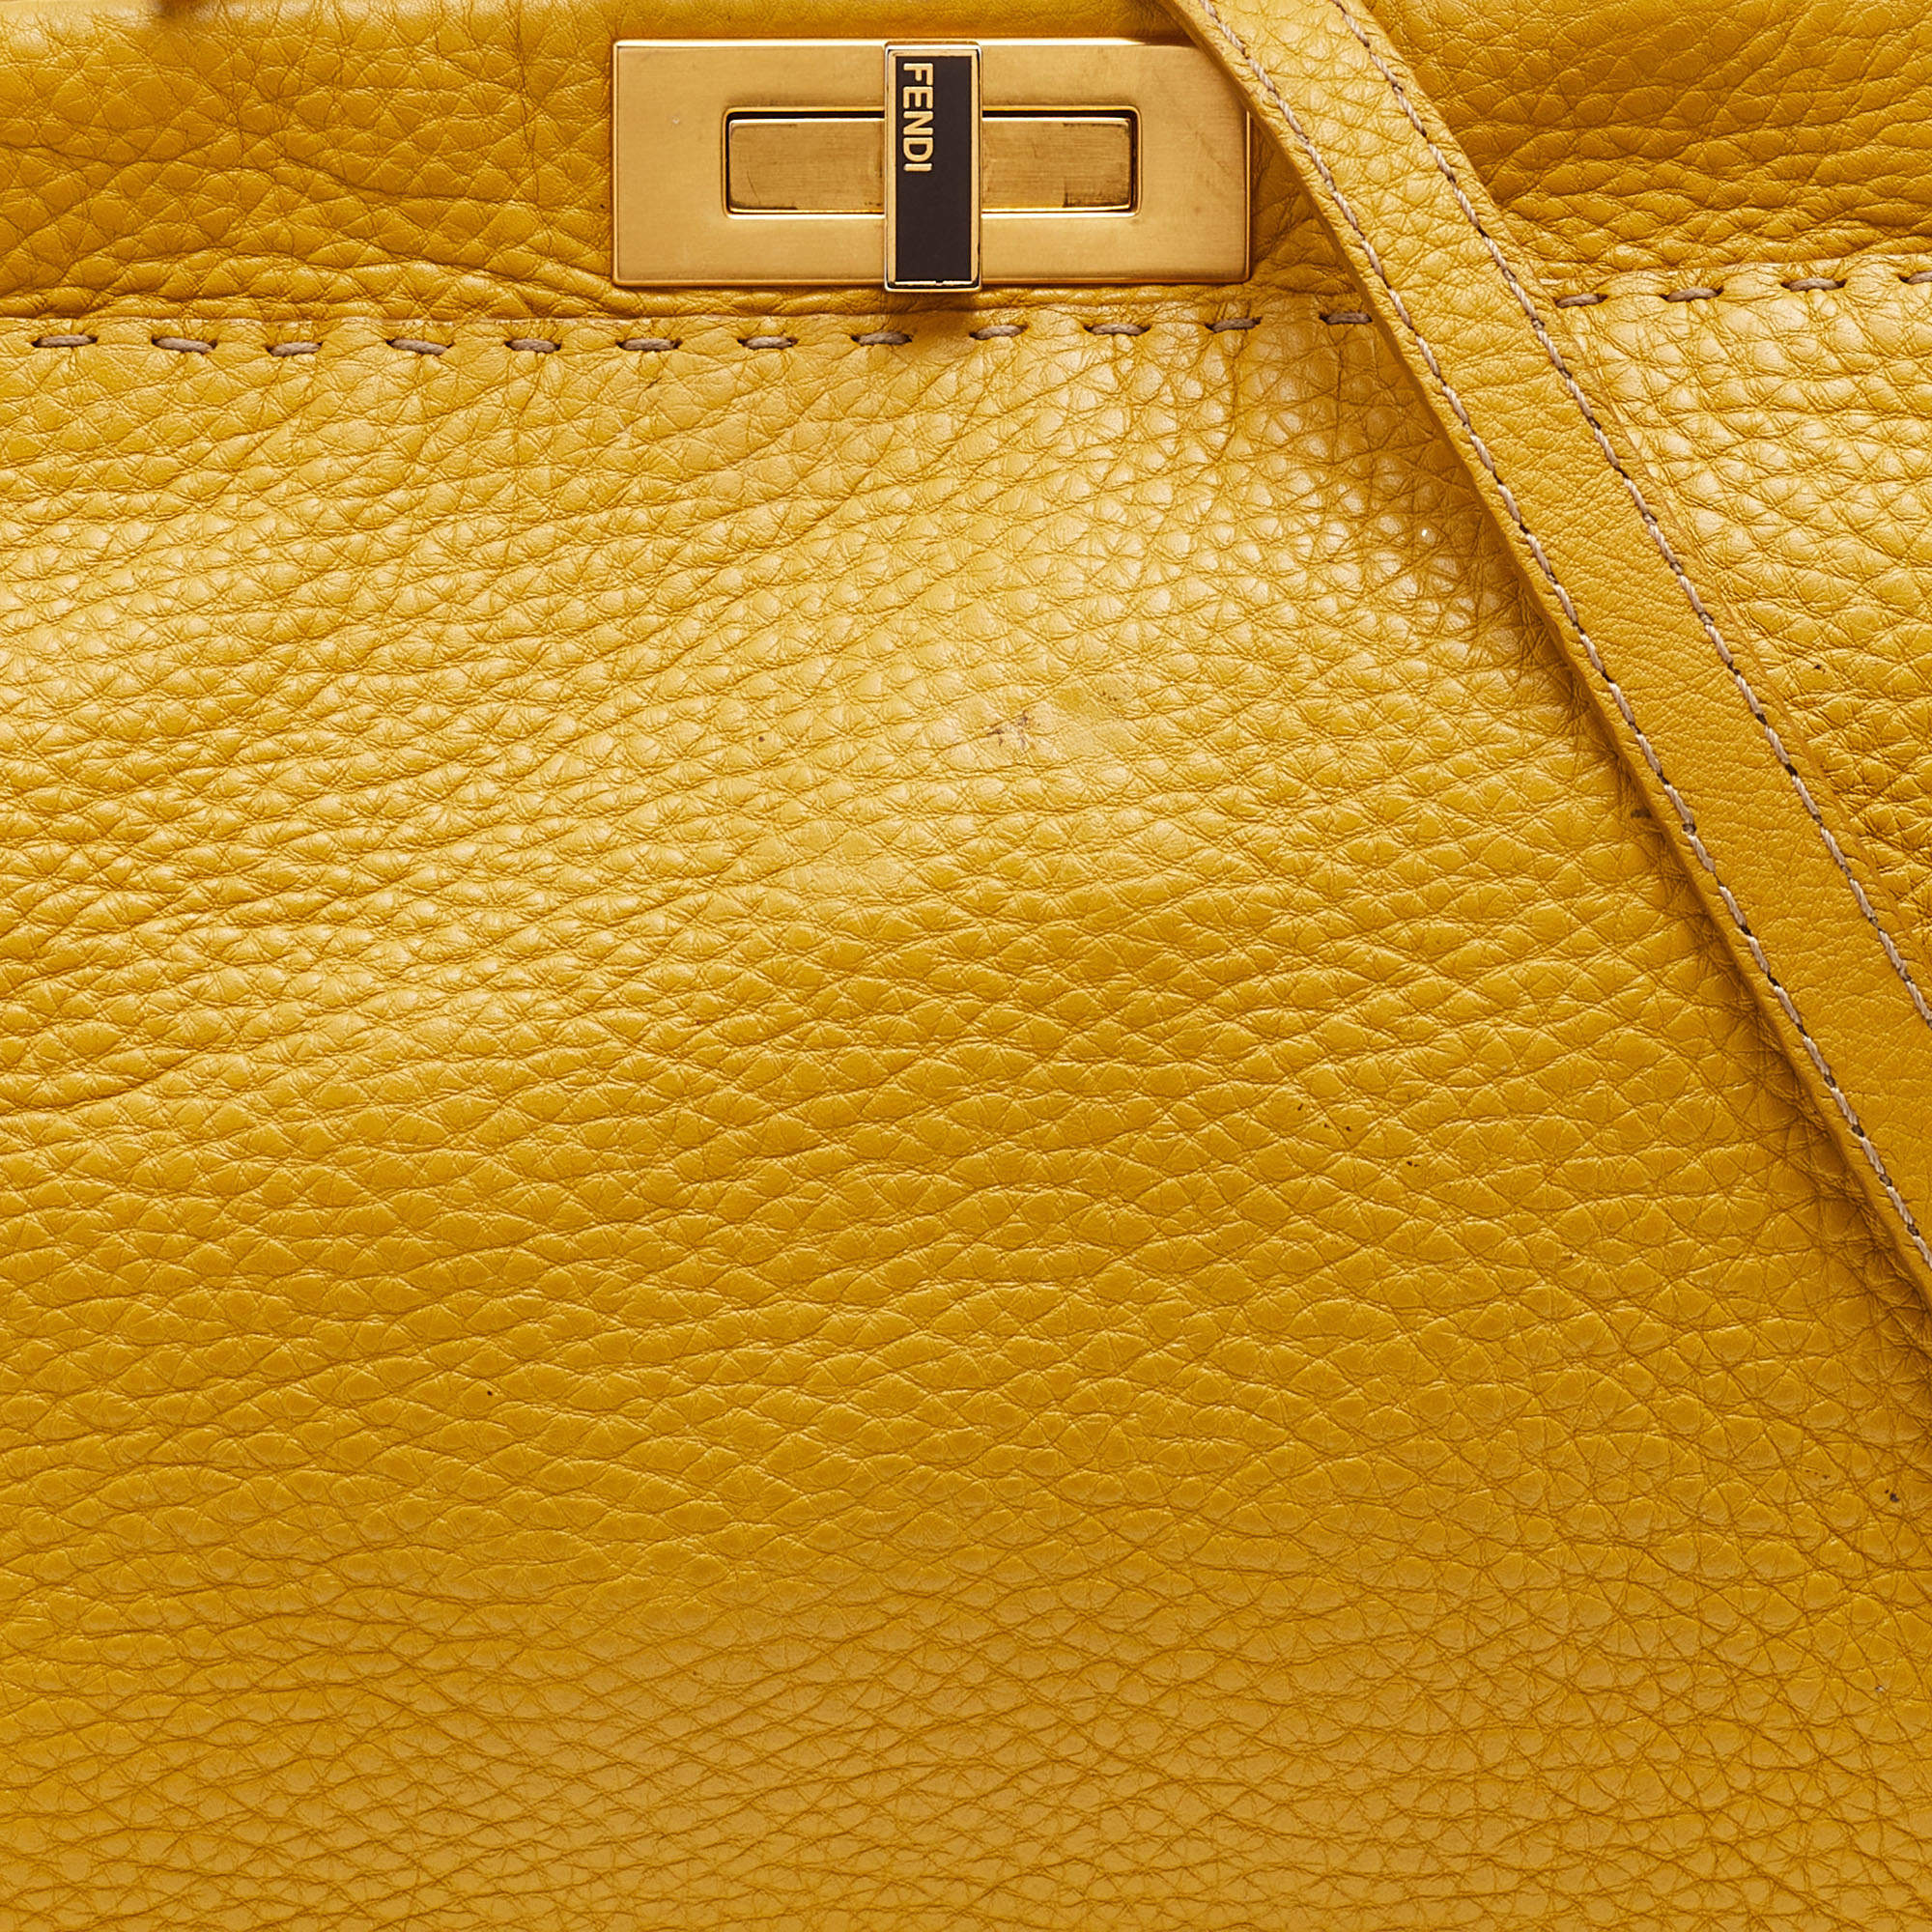 Fendi Leather Clutch Bag Yellow - Allu USA